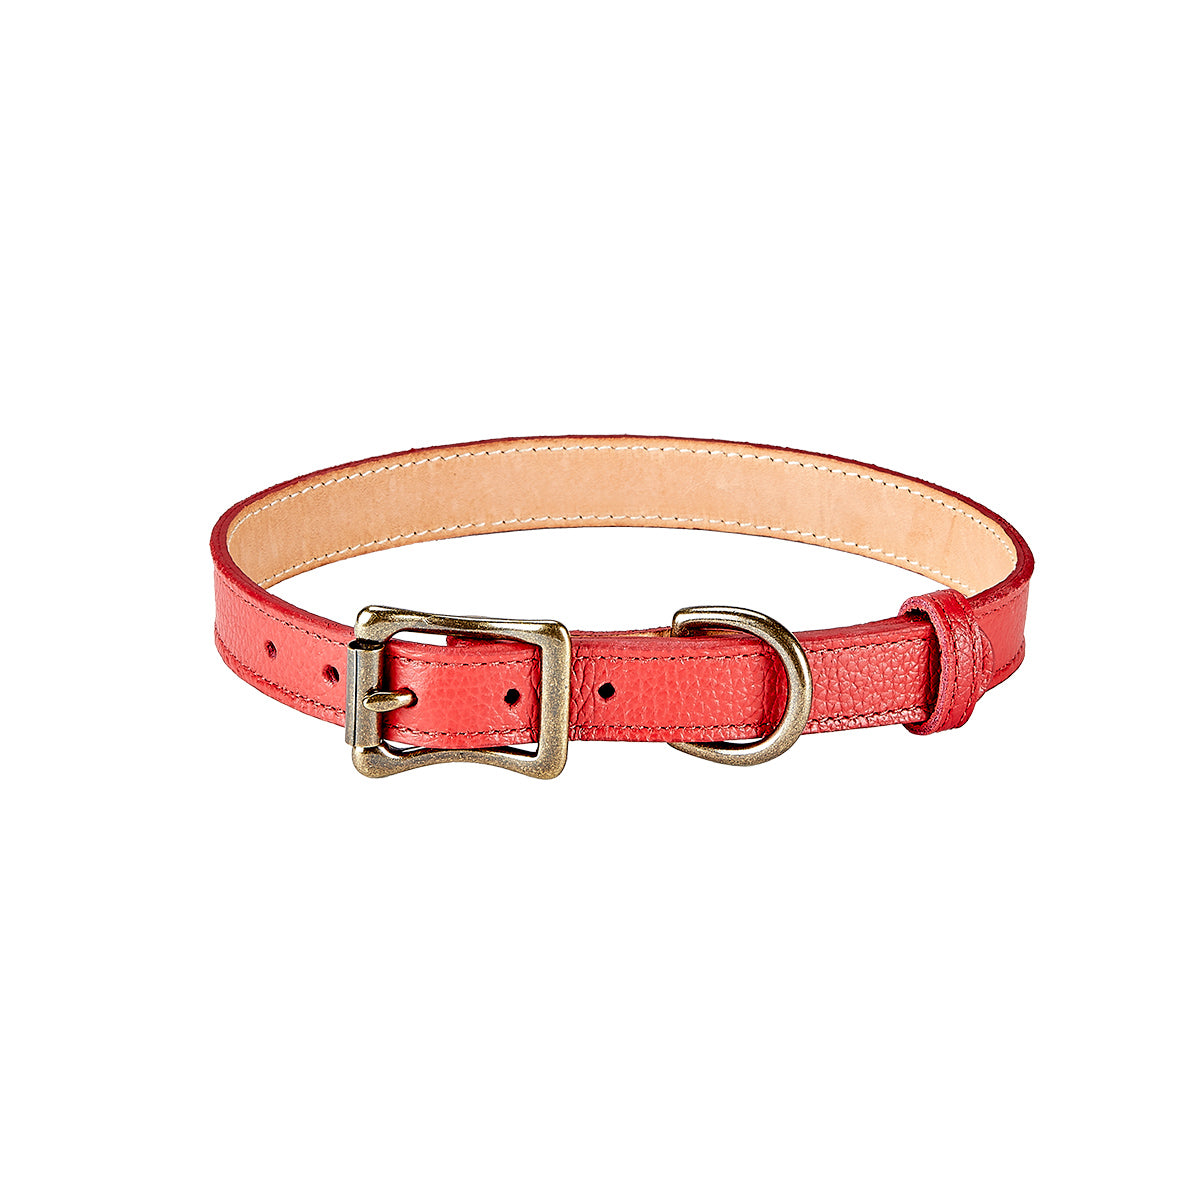 Graphic Image Medium Dog Collar Red Pebble Grain Leather